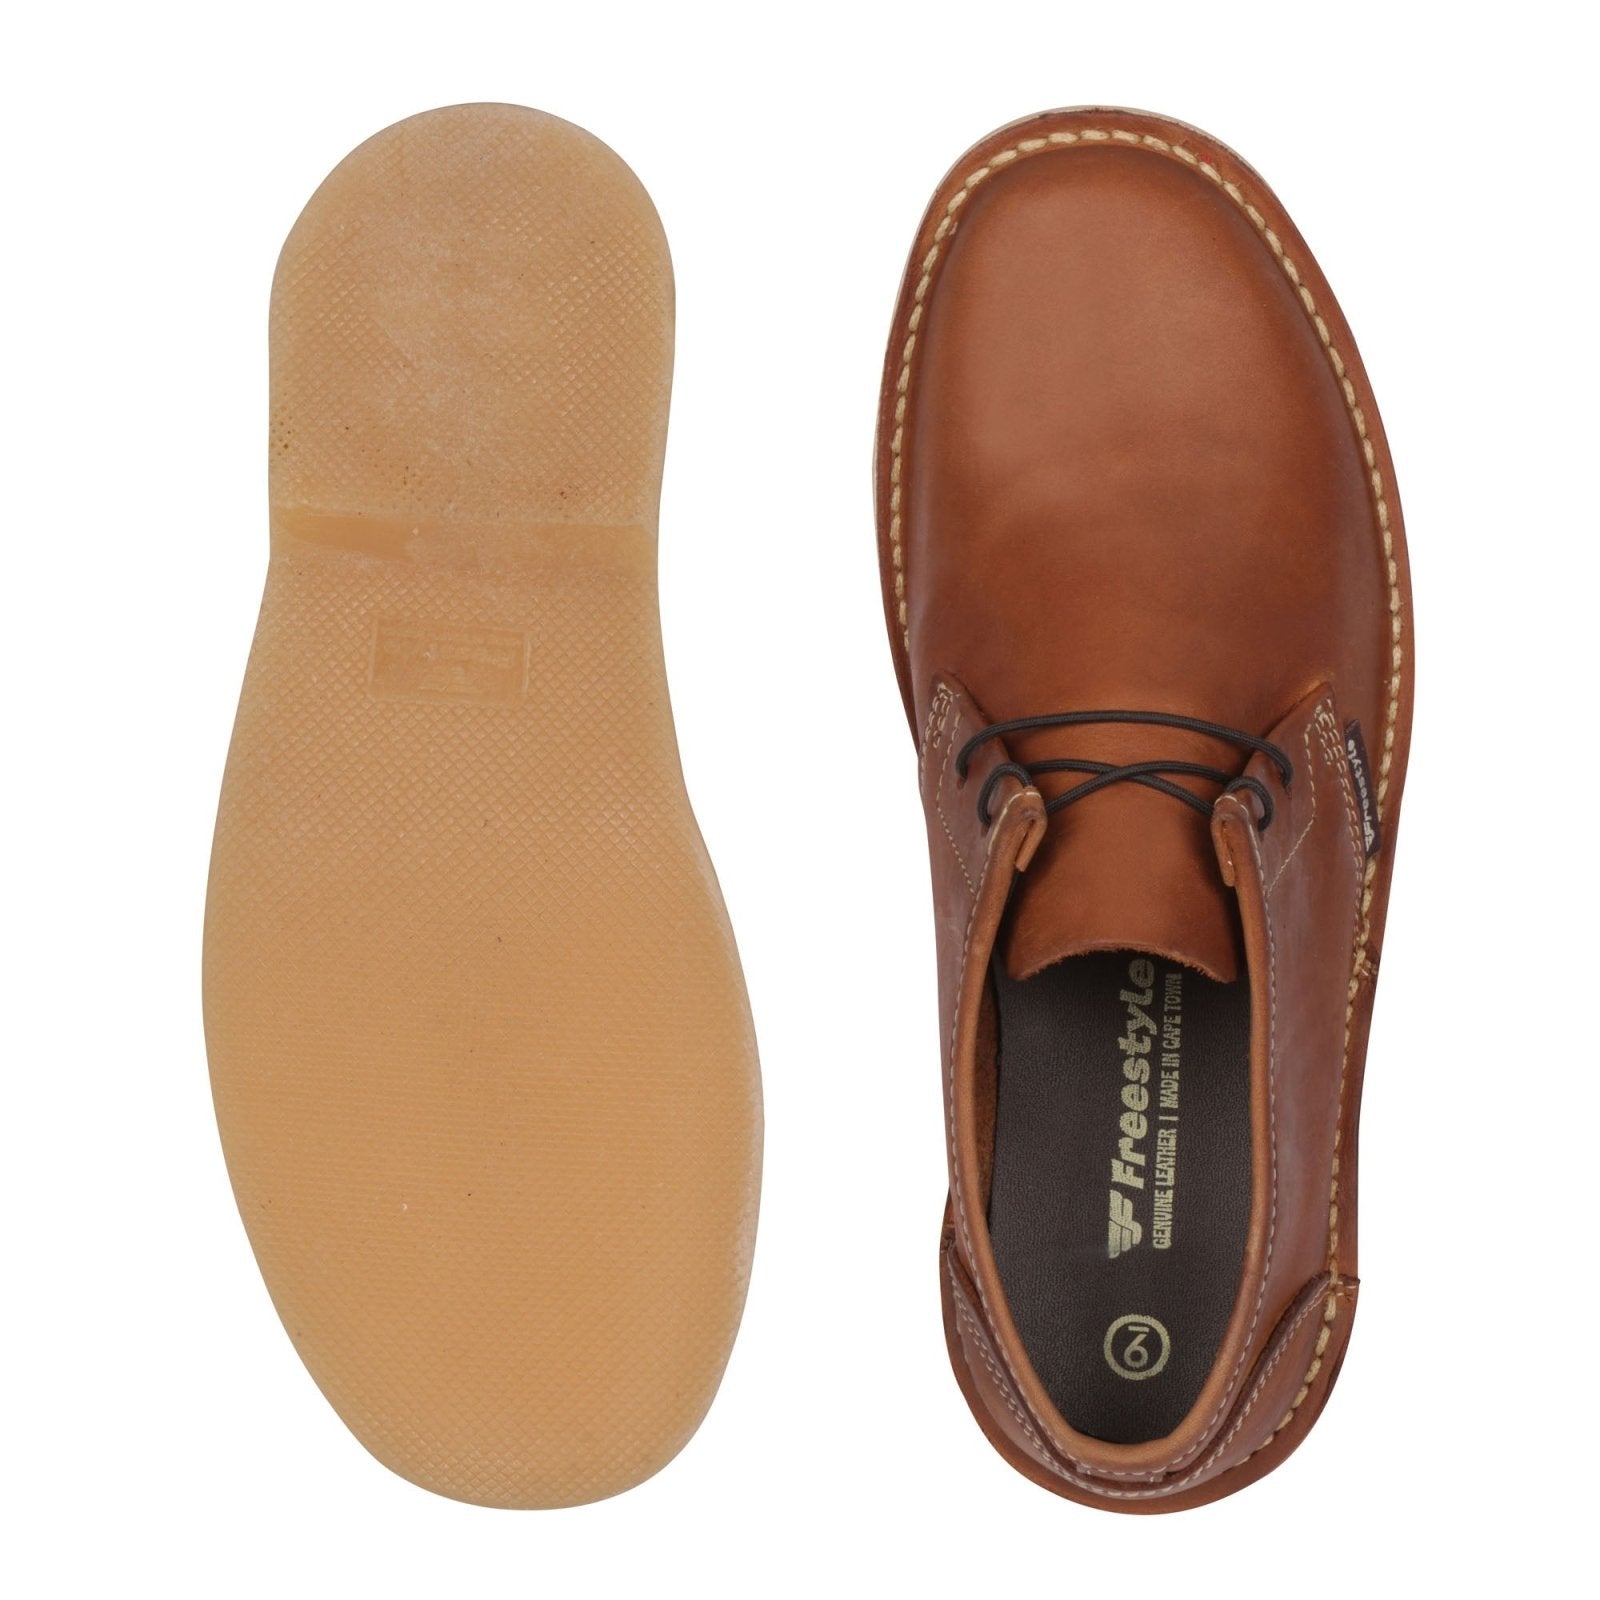 Owen Men's Premium Nubuck Leather Vellie shoe - Freestyle SA Proudly local leather boots veldskoens vellies leather shoes suede veldskoens